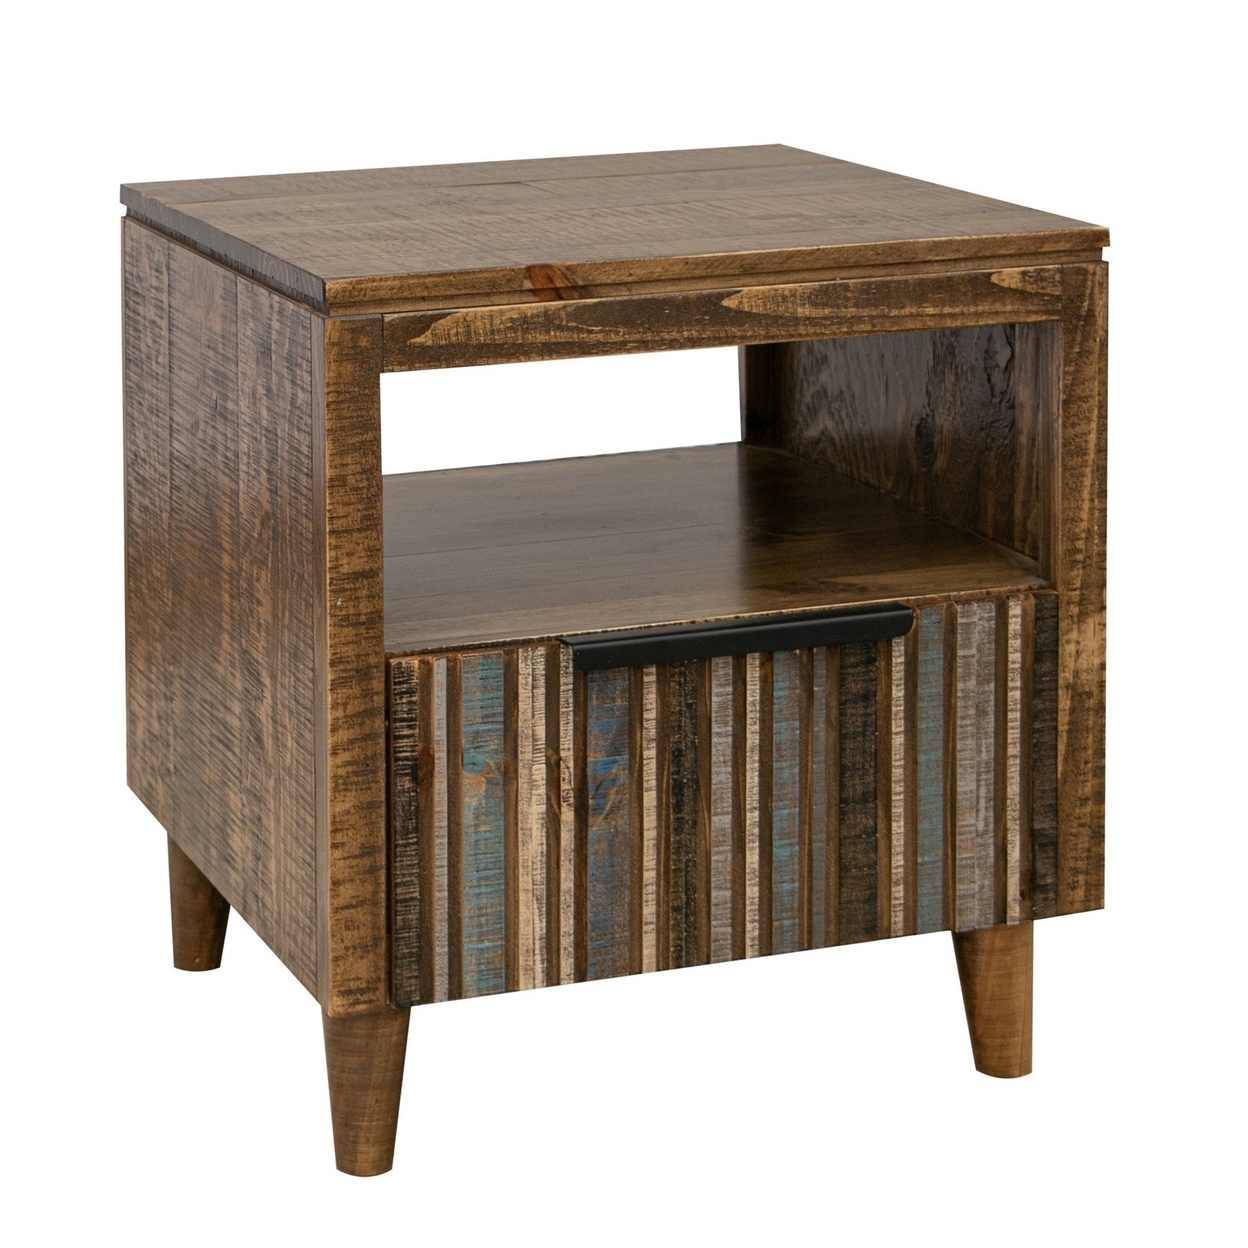 Texu 26 Inch Side End Table, Pine Wood, 1 Drawer, Open Shelf, Brown, Blue - Saltoro Sherpi